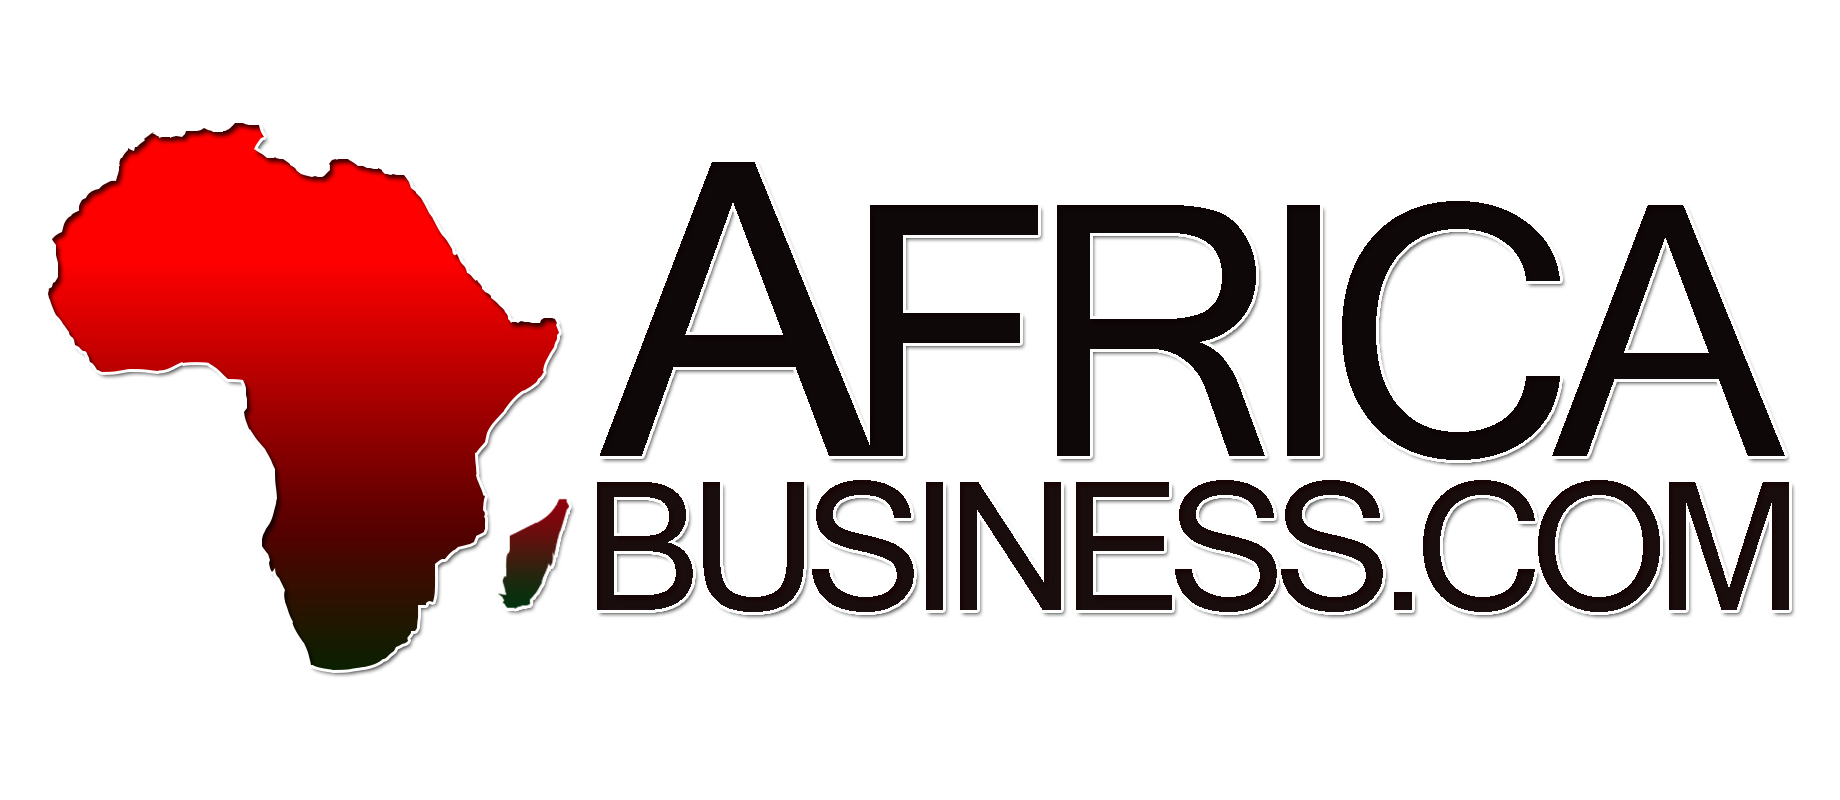 Africa com. Африка логотип. Раша Африка логотип. Бизнес в Африке. Саммит Россия Африка лого.